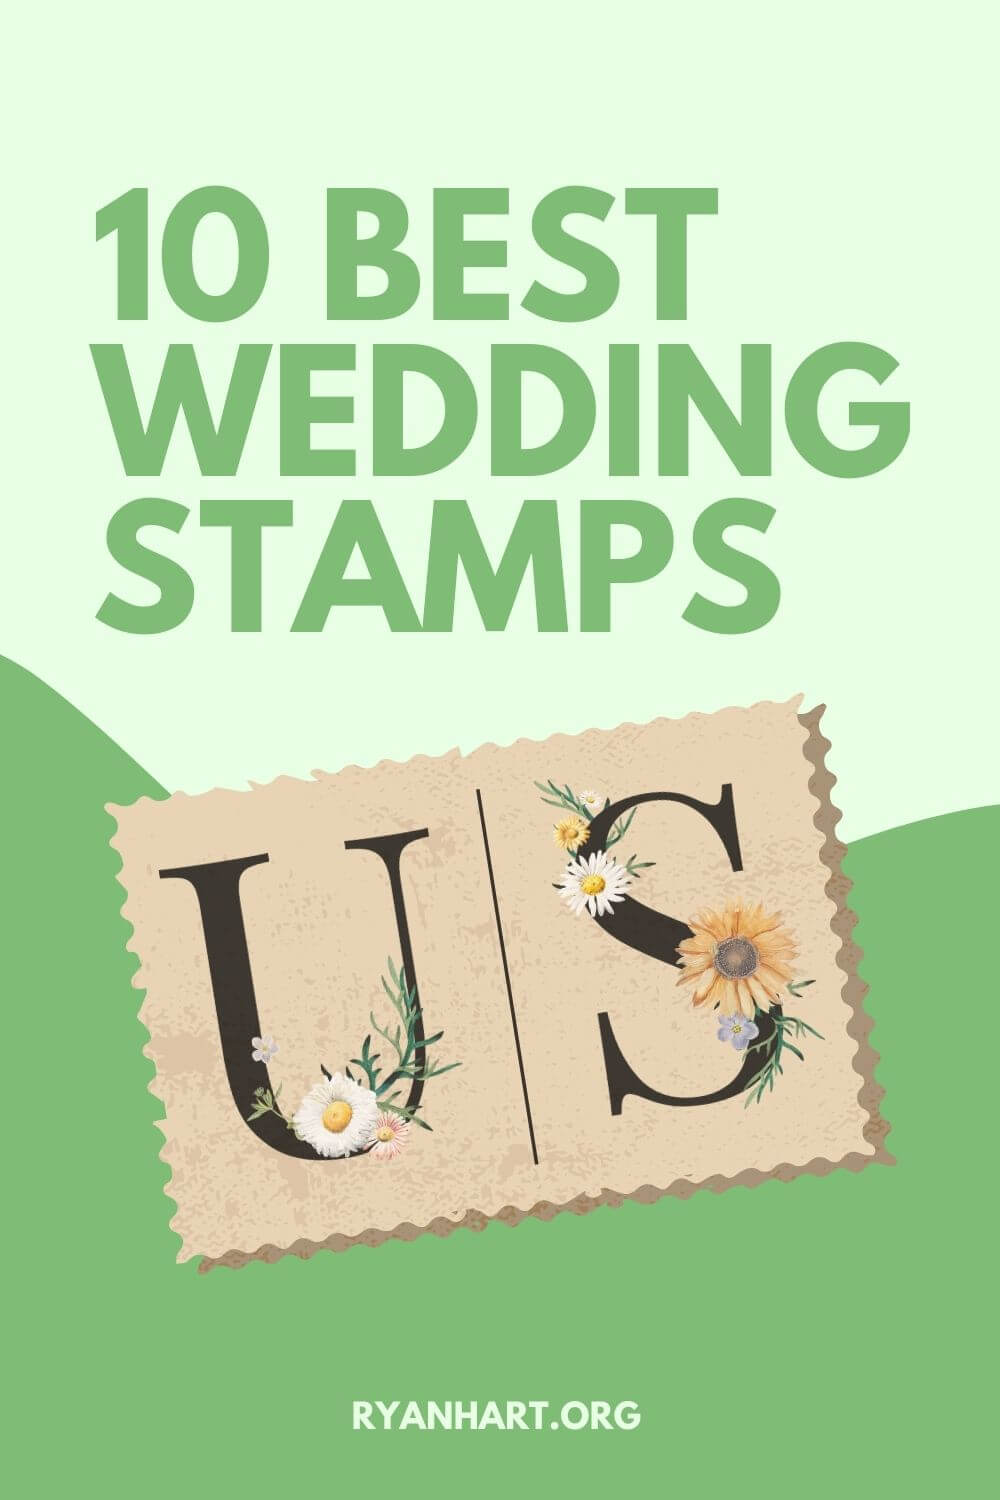 Weddign invitation Postage stamps